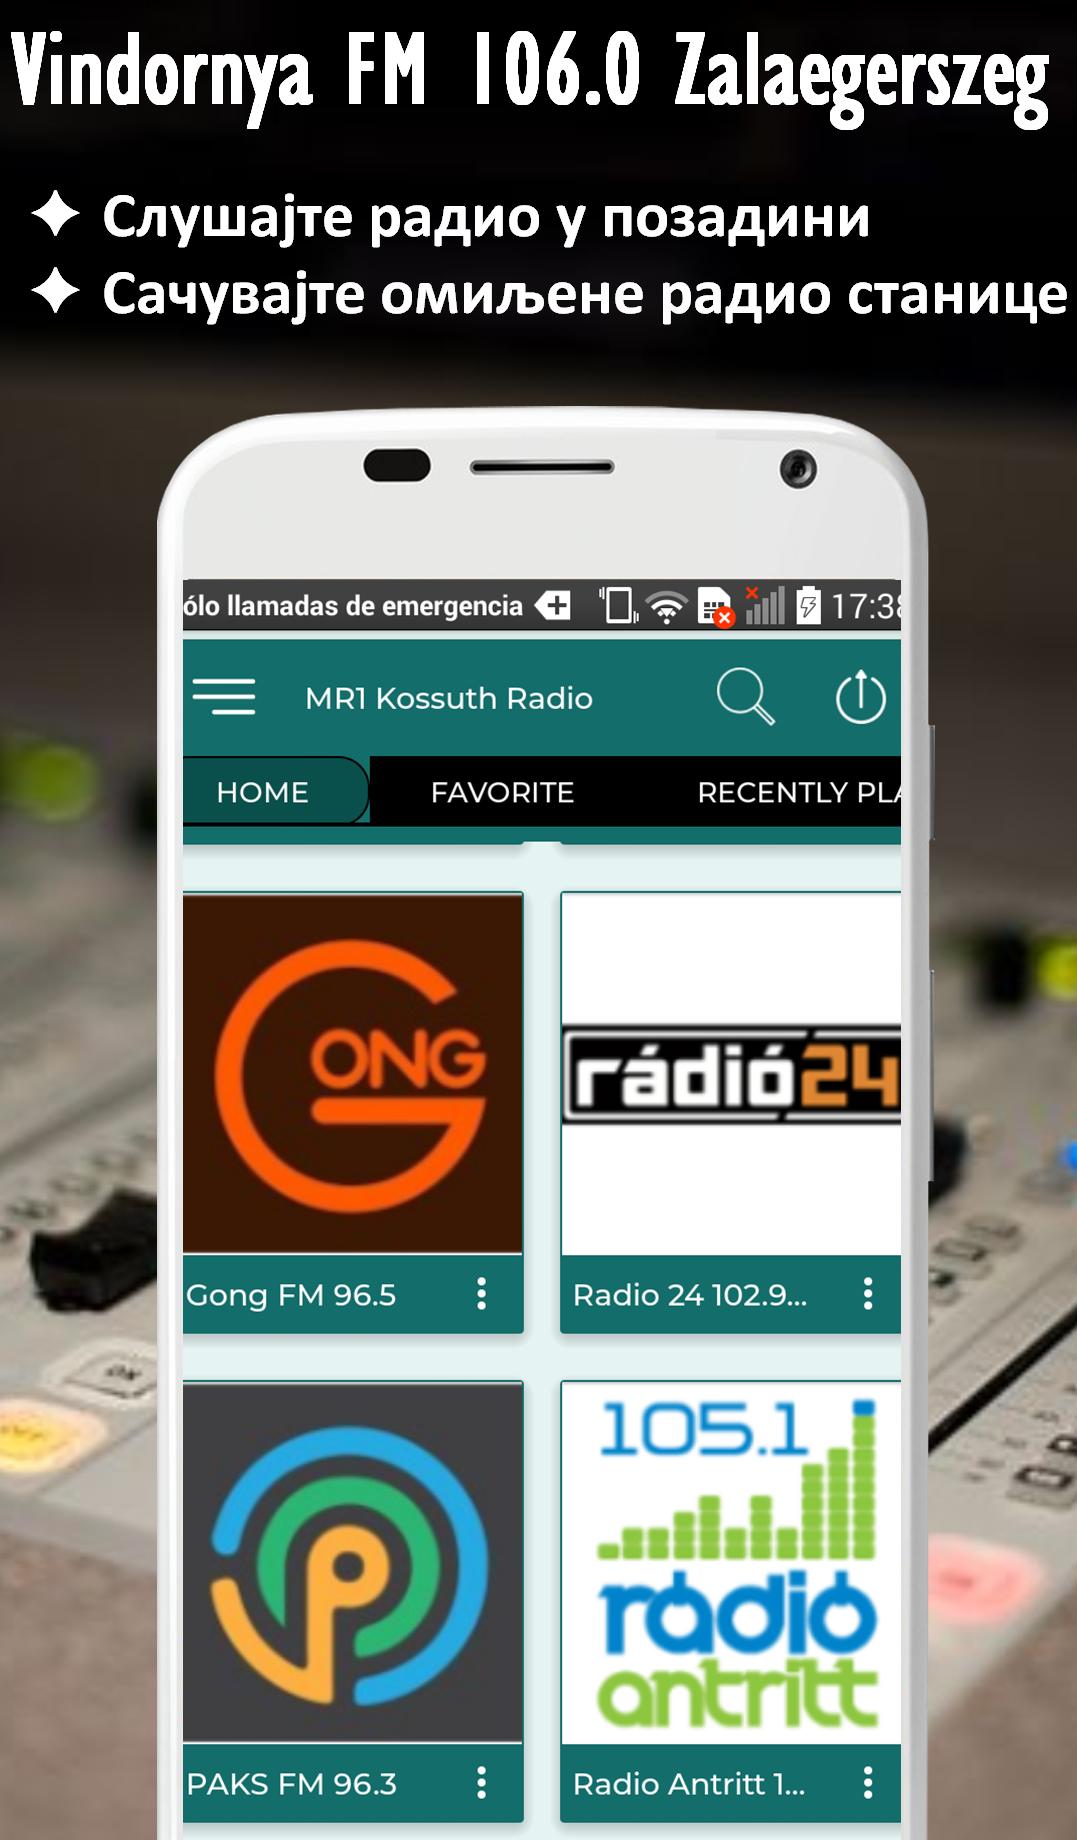 Vindornya FM 106.0 Zalaegerszeg + Hungary Radios APK for Android Download